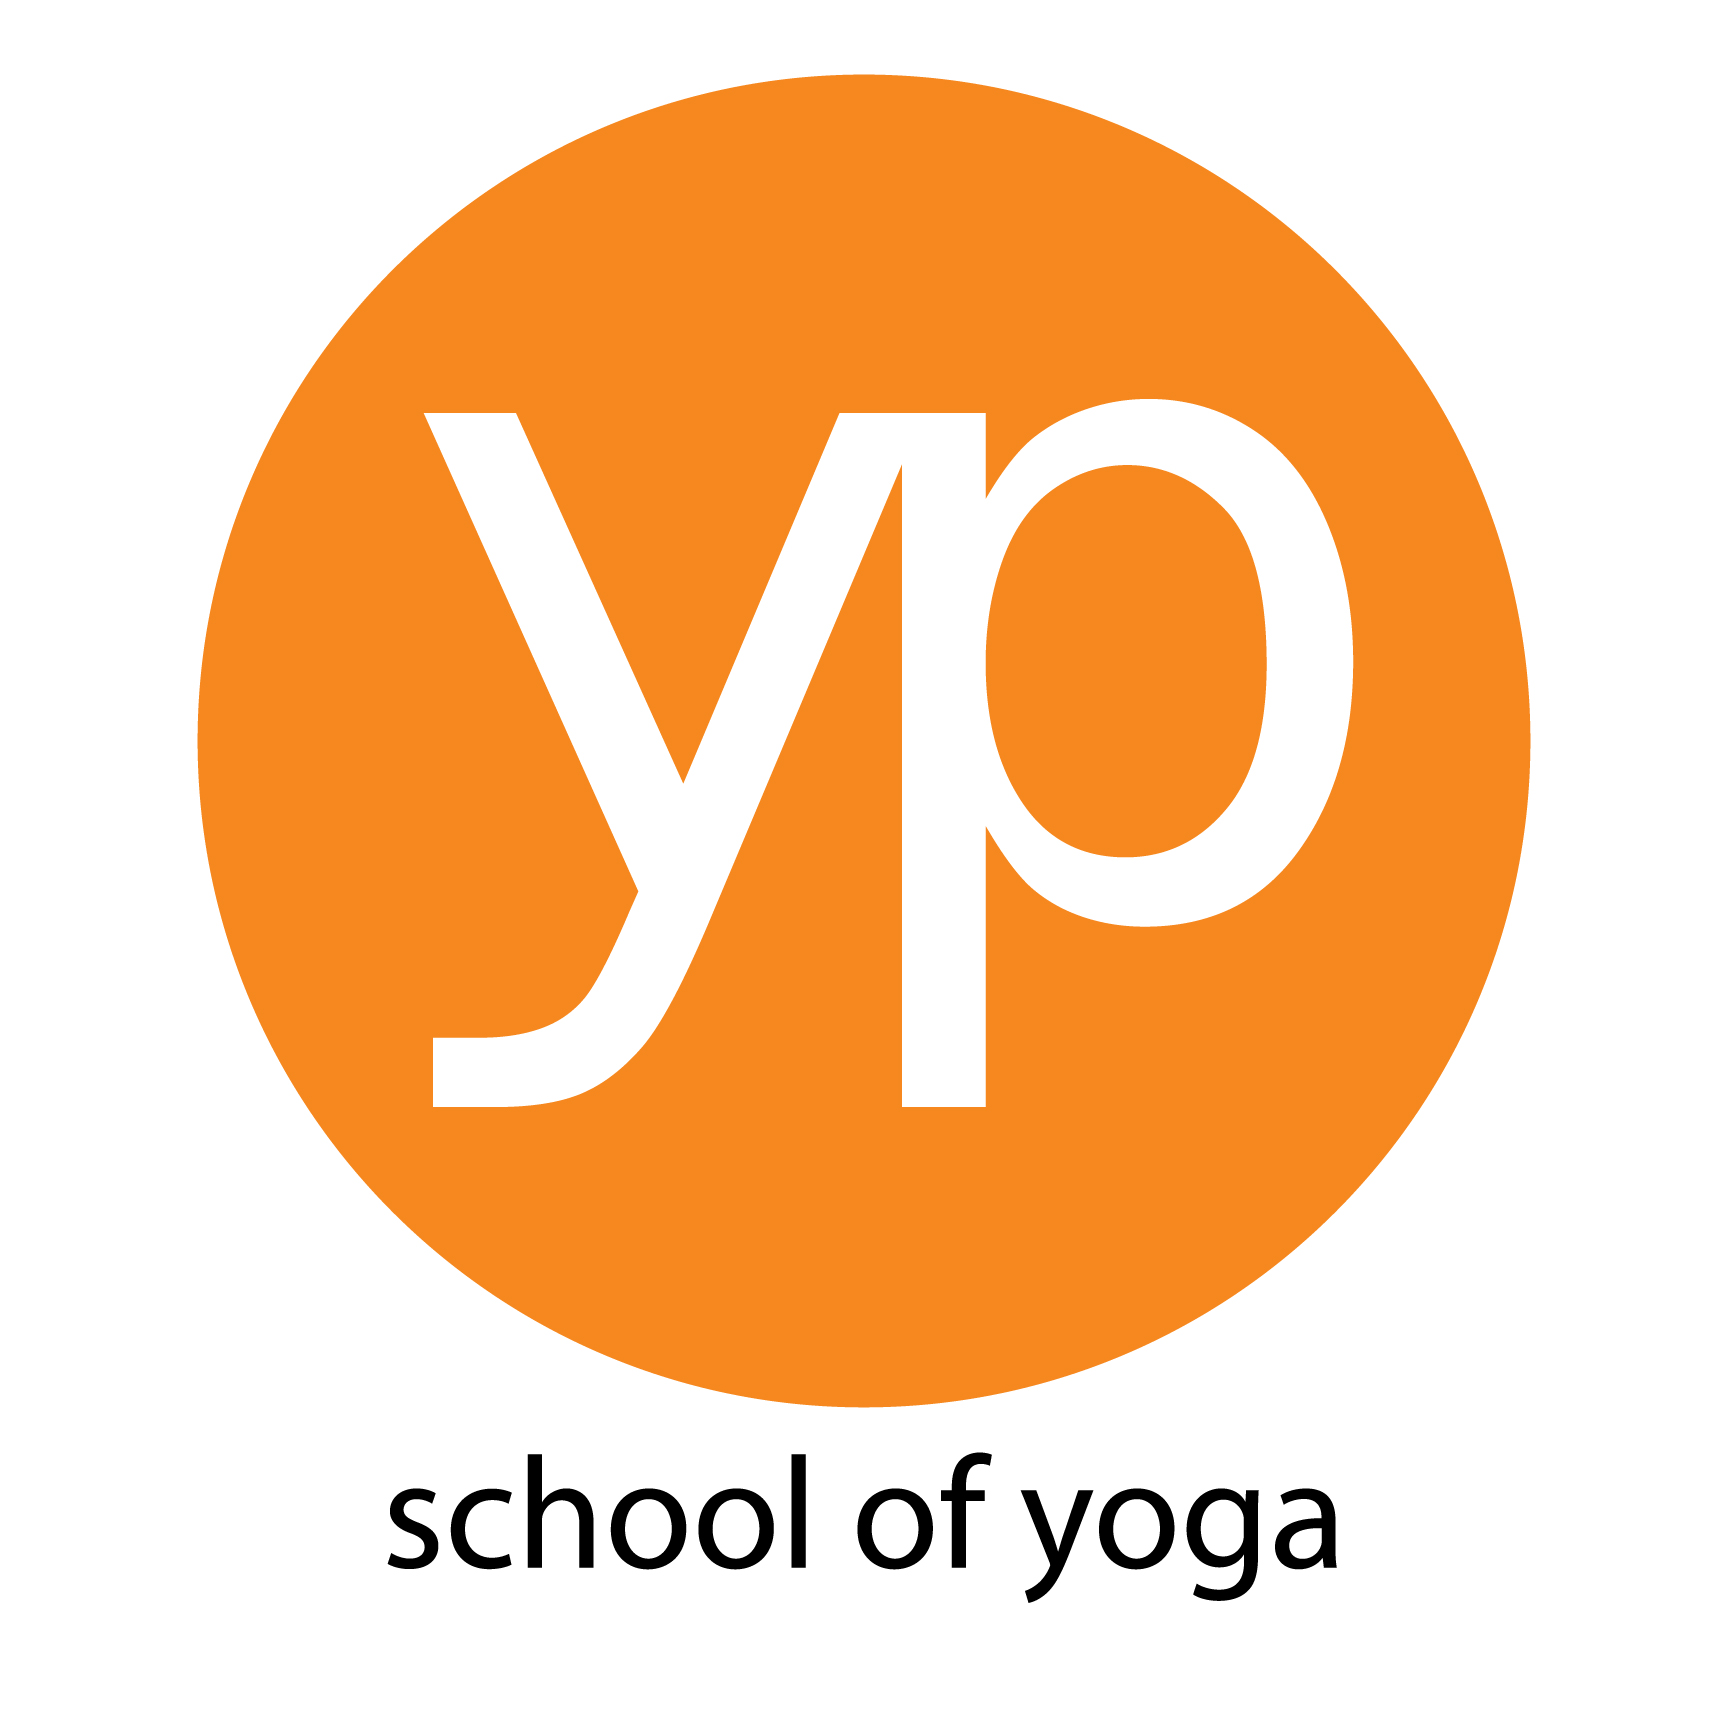 1 Hr Power Vinyasa Yoga Class with Stacy Dockins